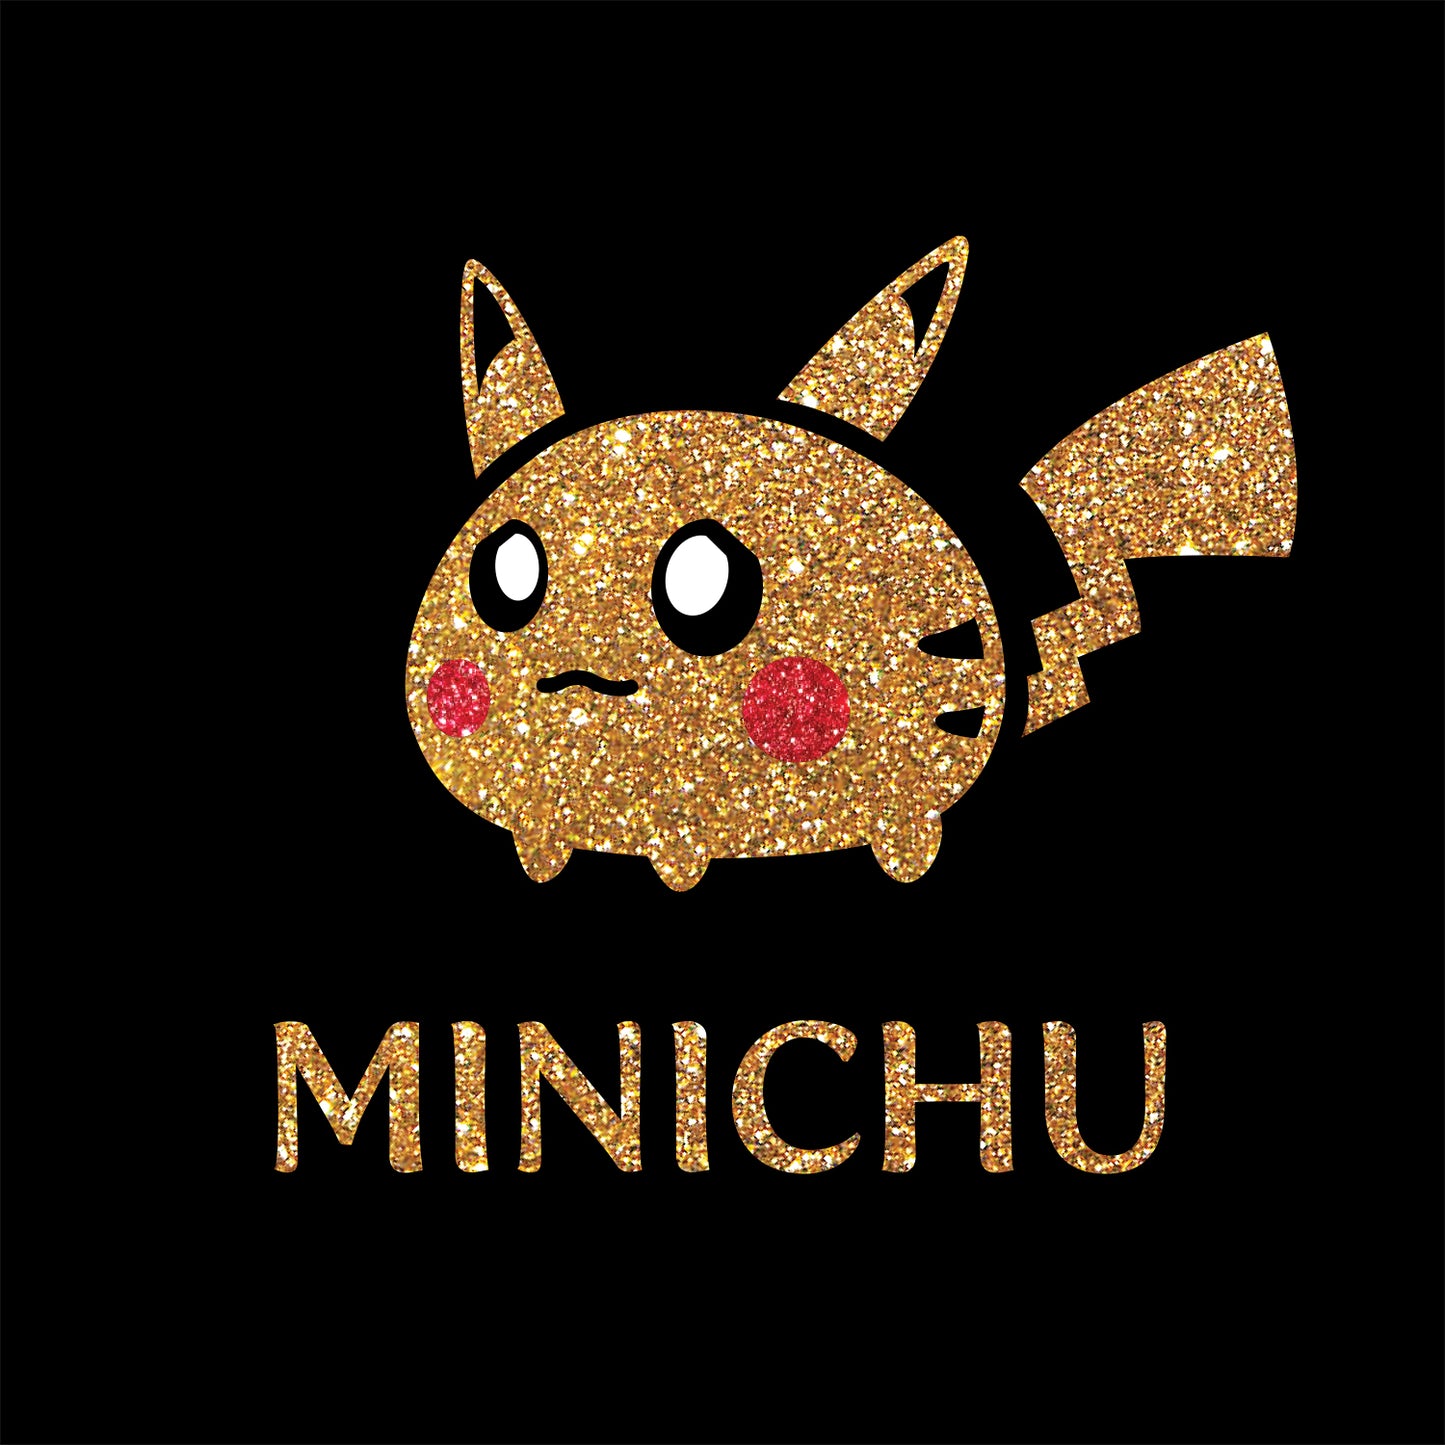 Minichu T-Shirt